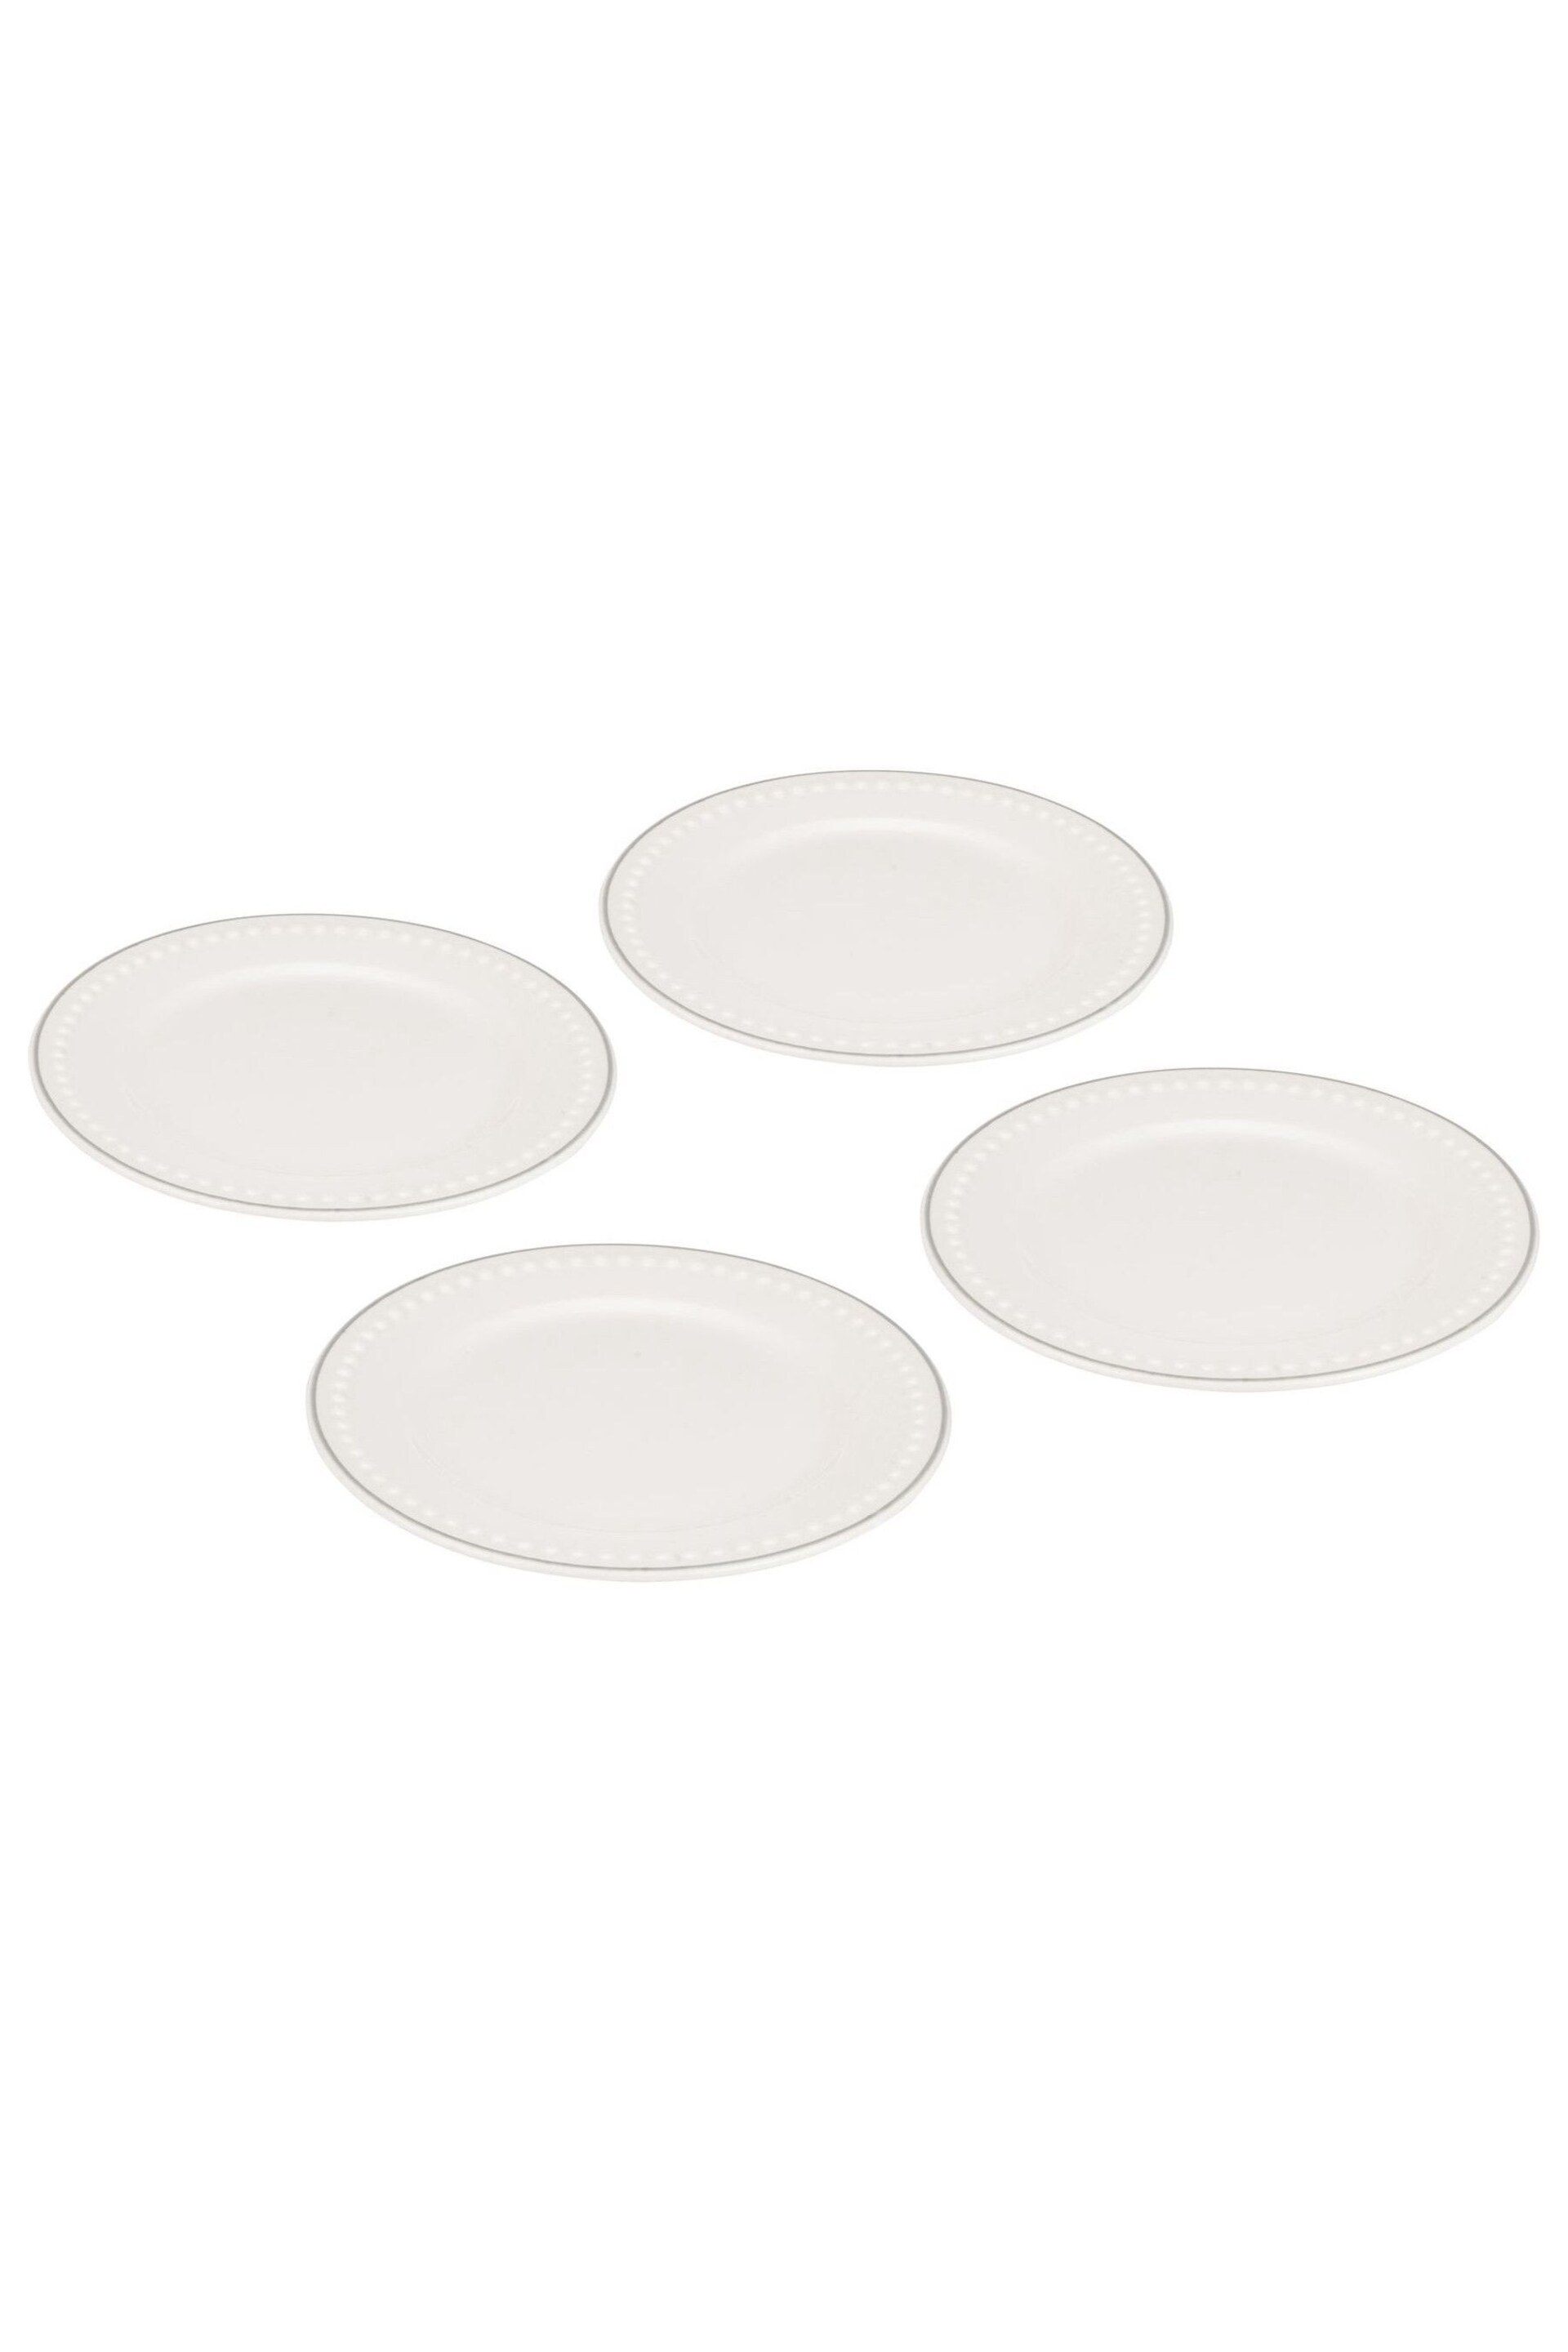 Mary Berry Set of 4 White Signature Cake Plates - Image 2 of 3